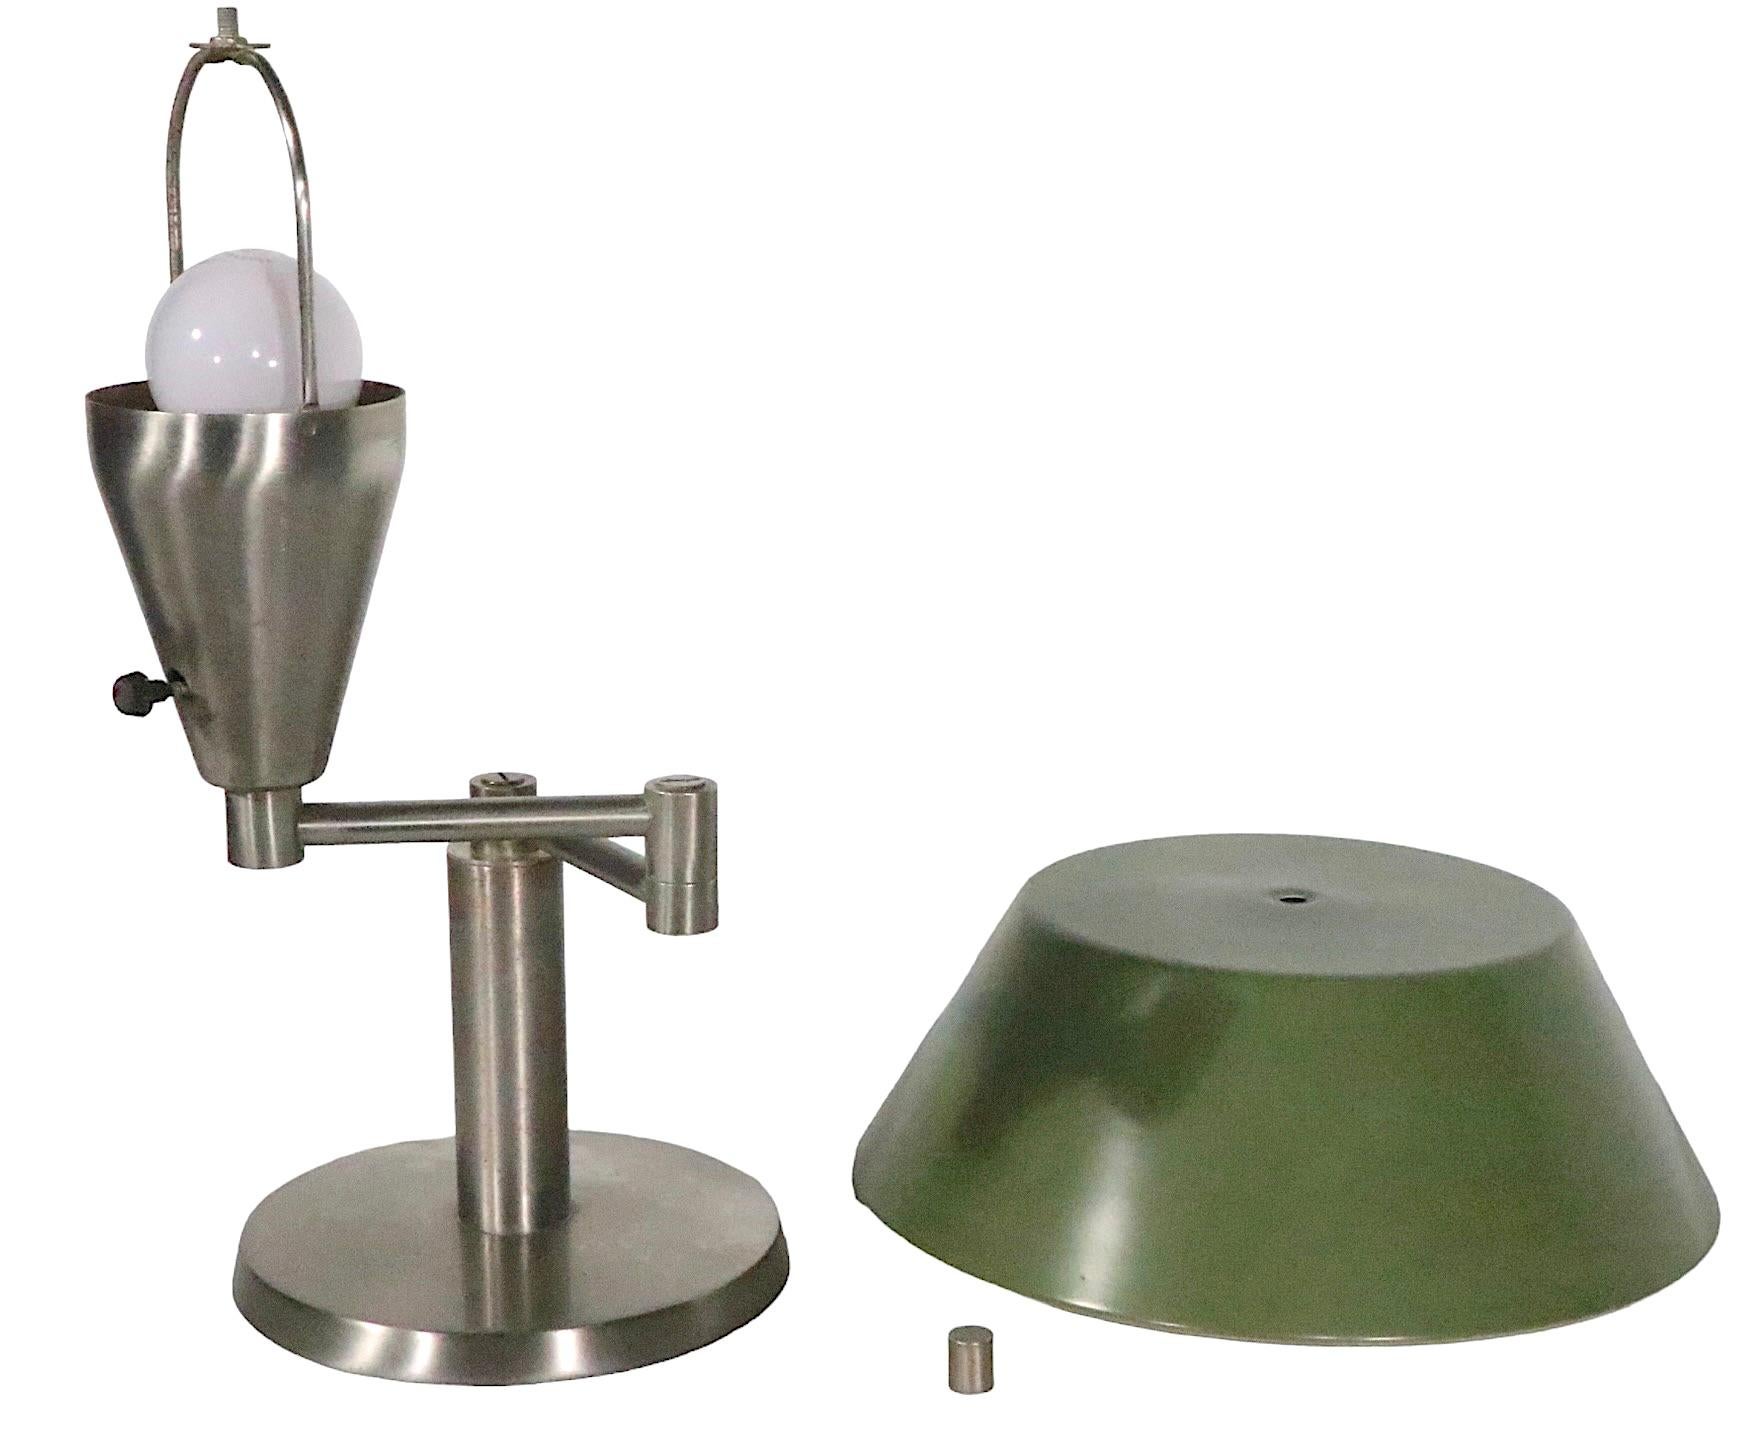 Bauhaus Iconic Walter Von Nessen Swing Arm Desk Lamp with Original Metal Shade For Sale